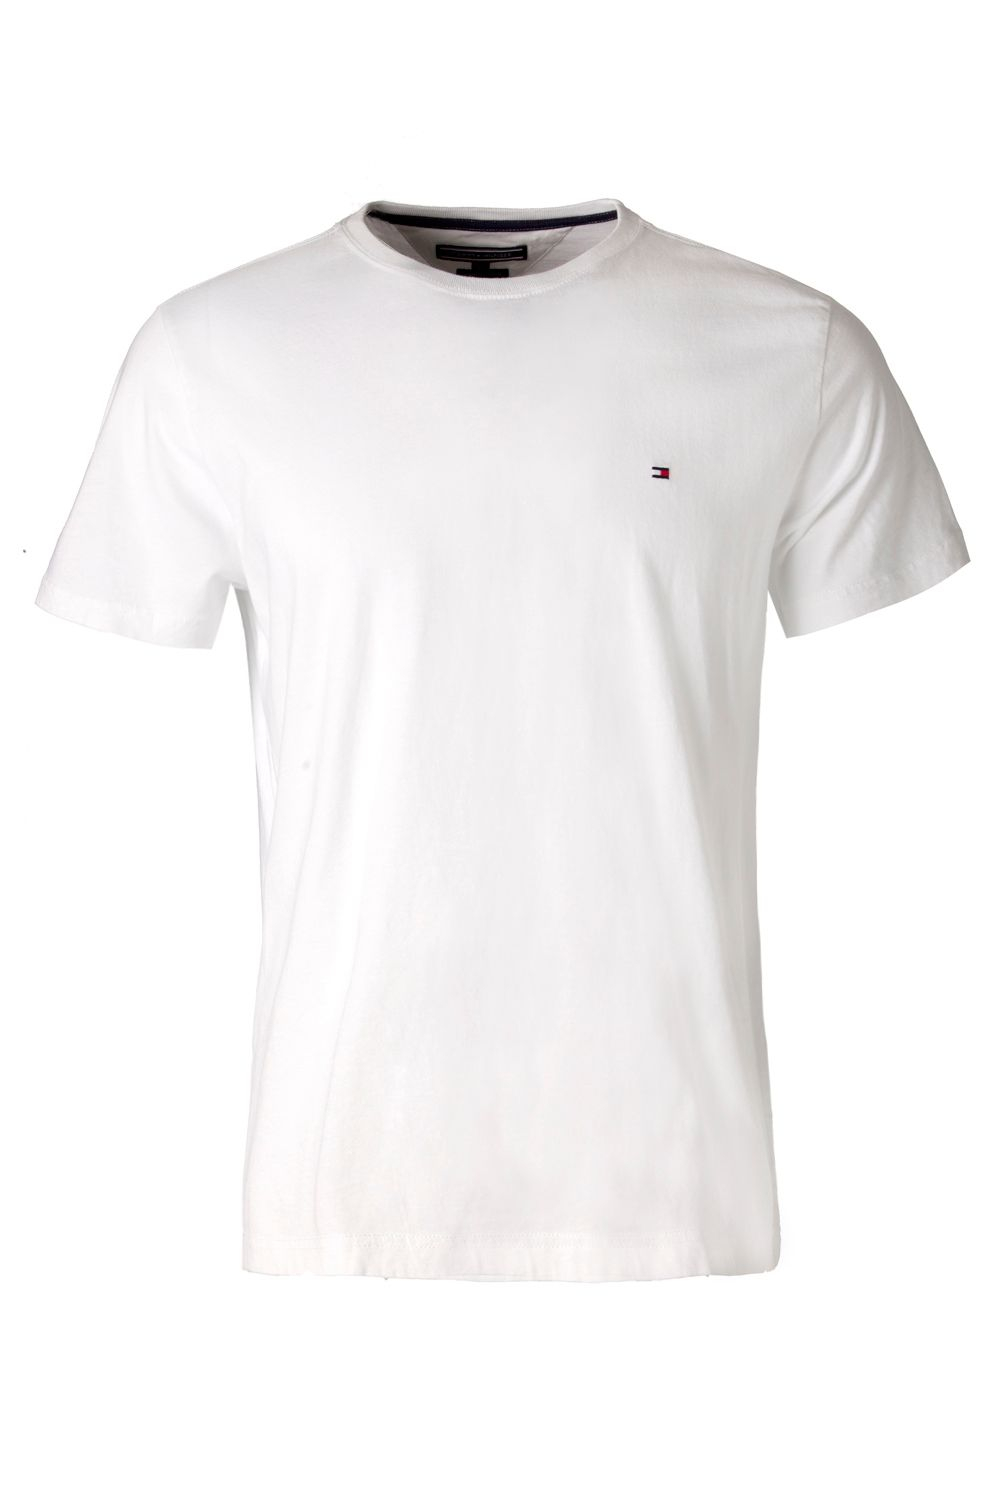 Tommy Hilfiger Flag Crew Neck Short Sleeve T-Shirt